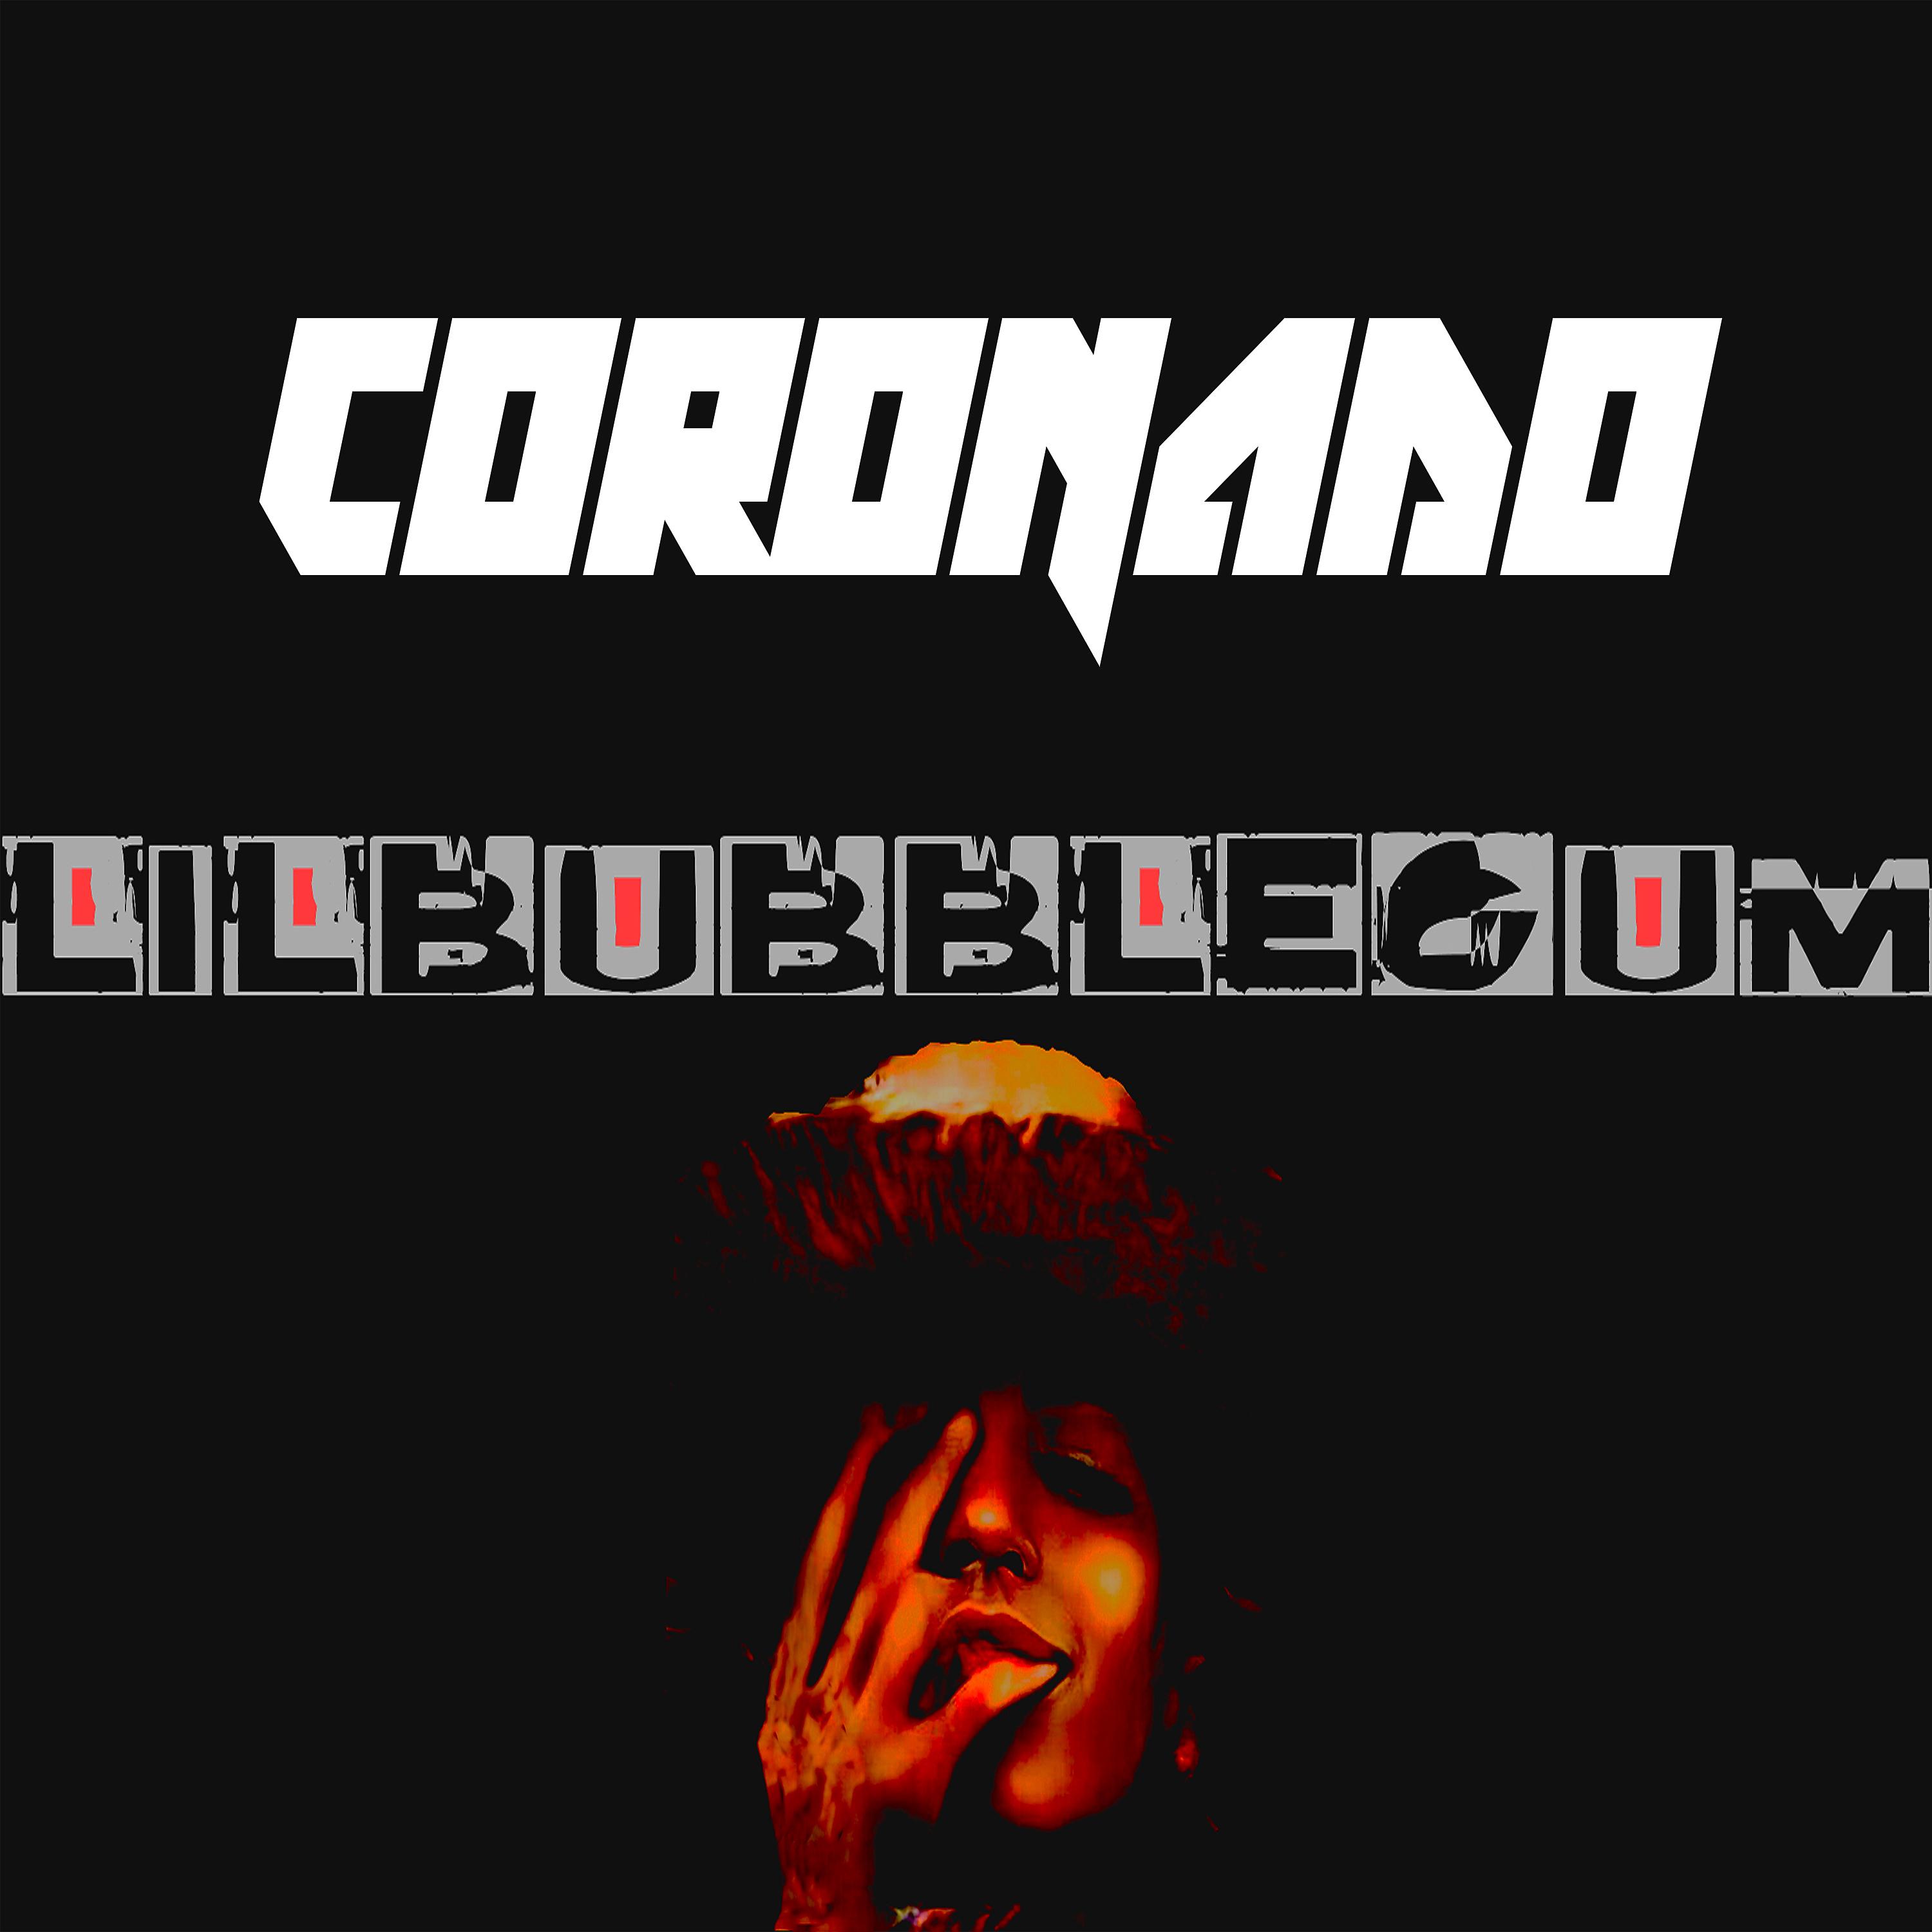 Постер альбома Coronado